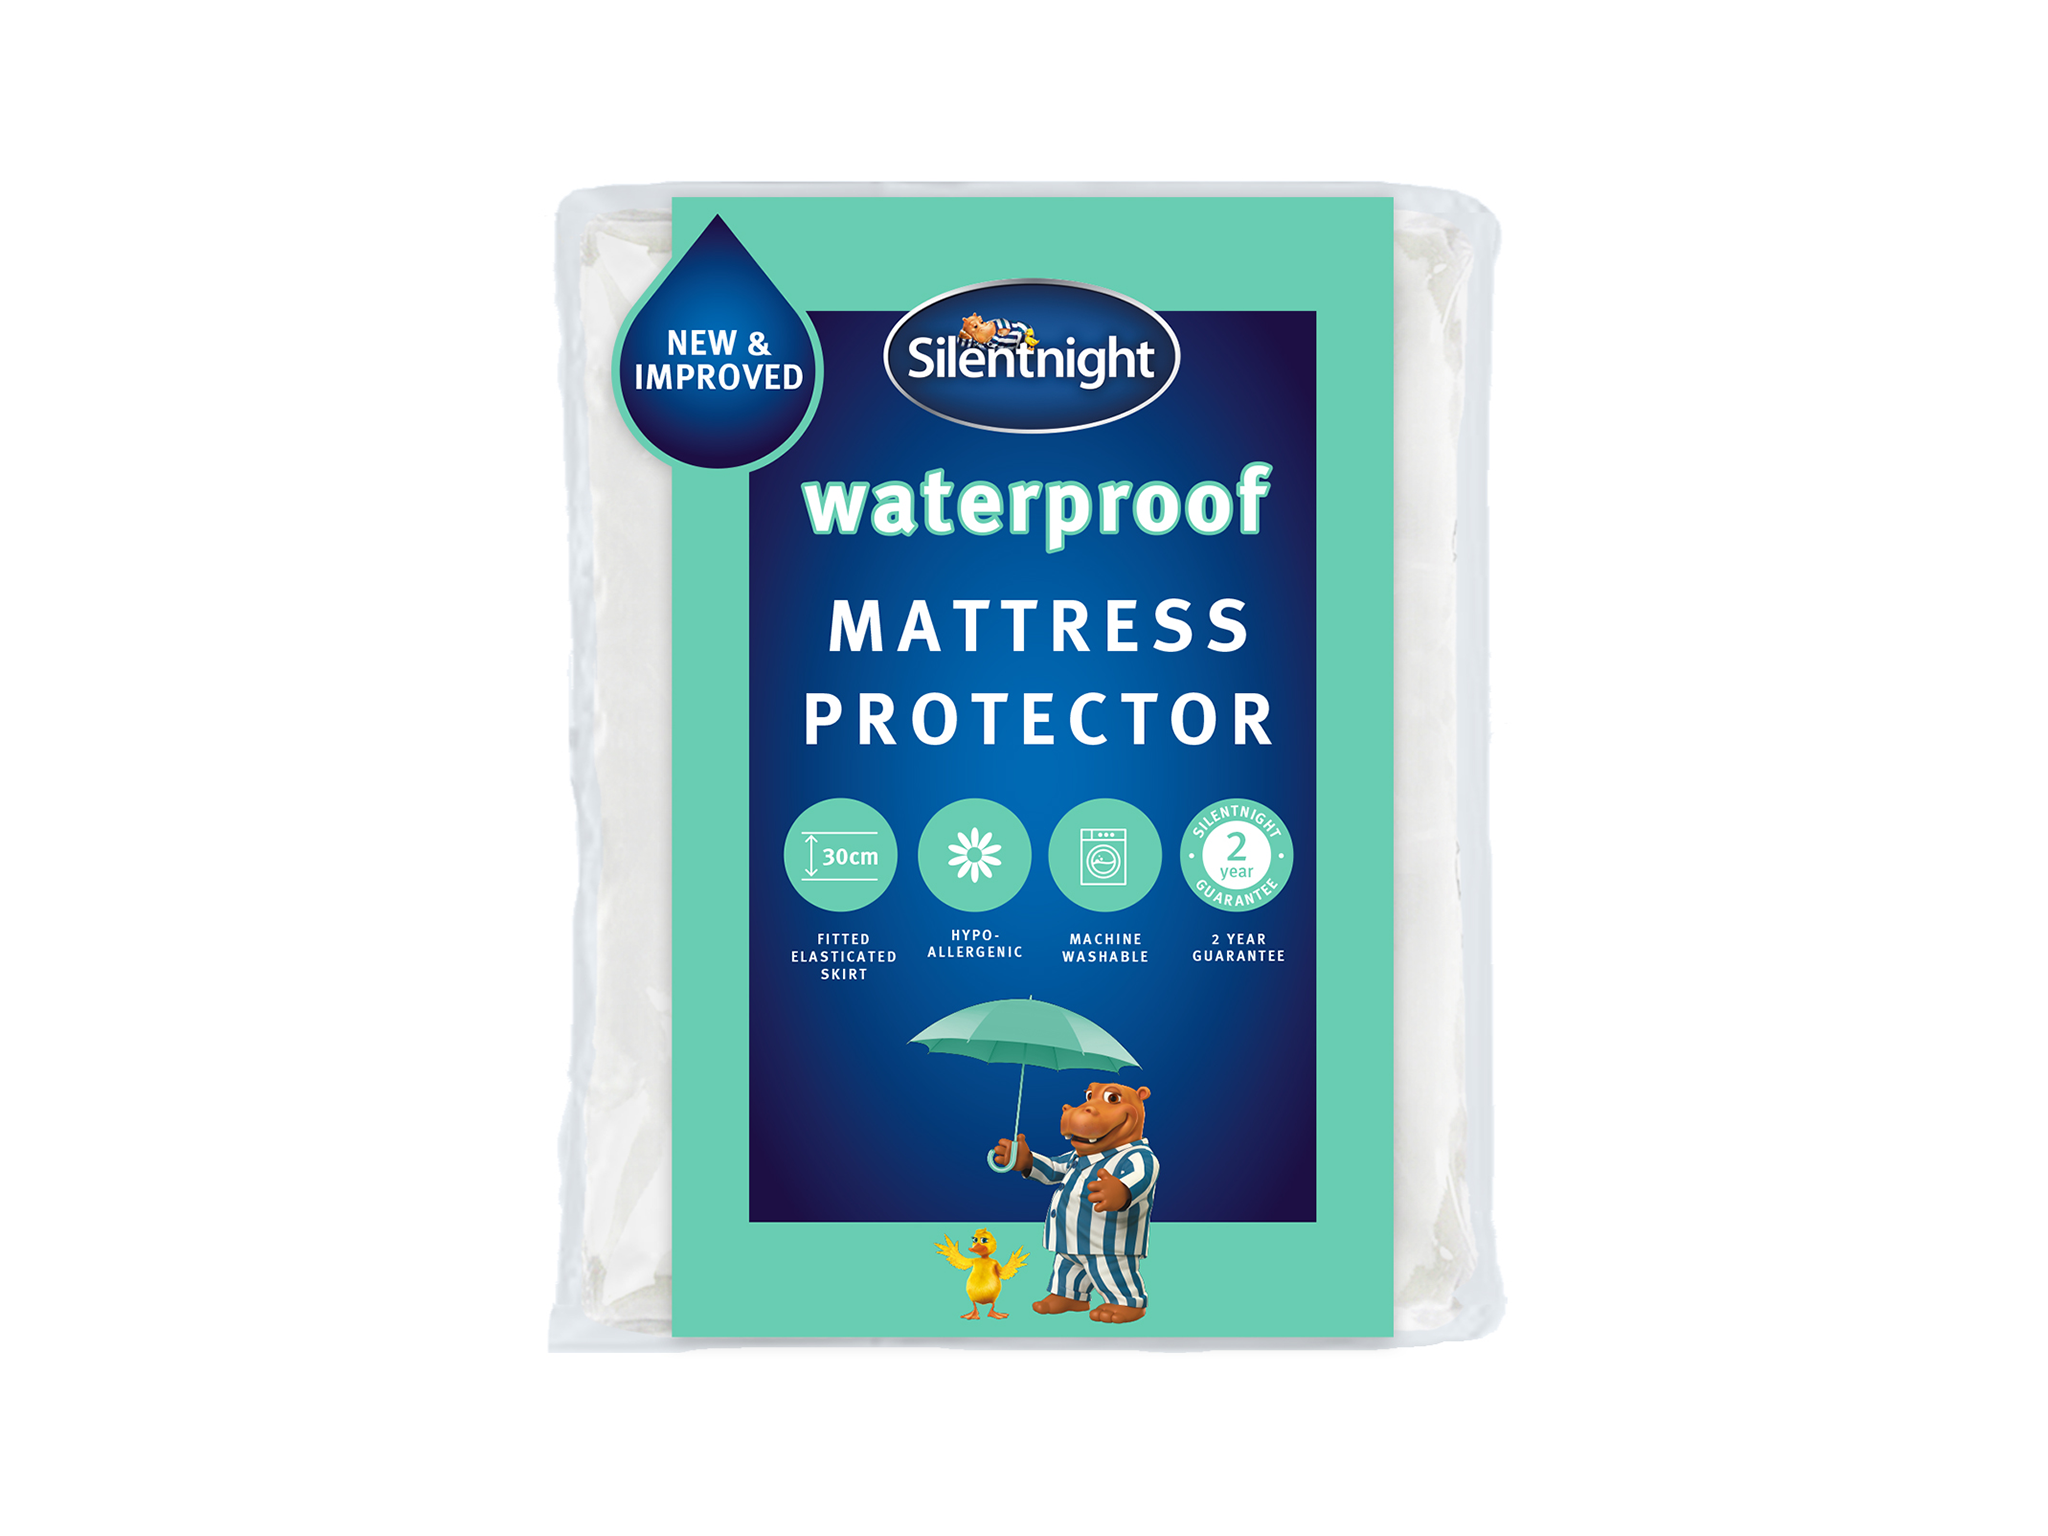 Silentnight waterproof mattress protector